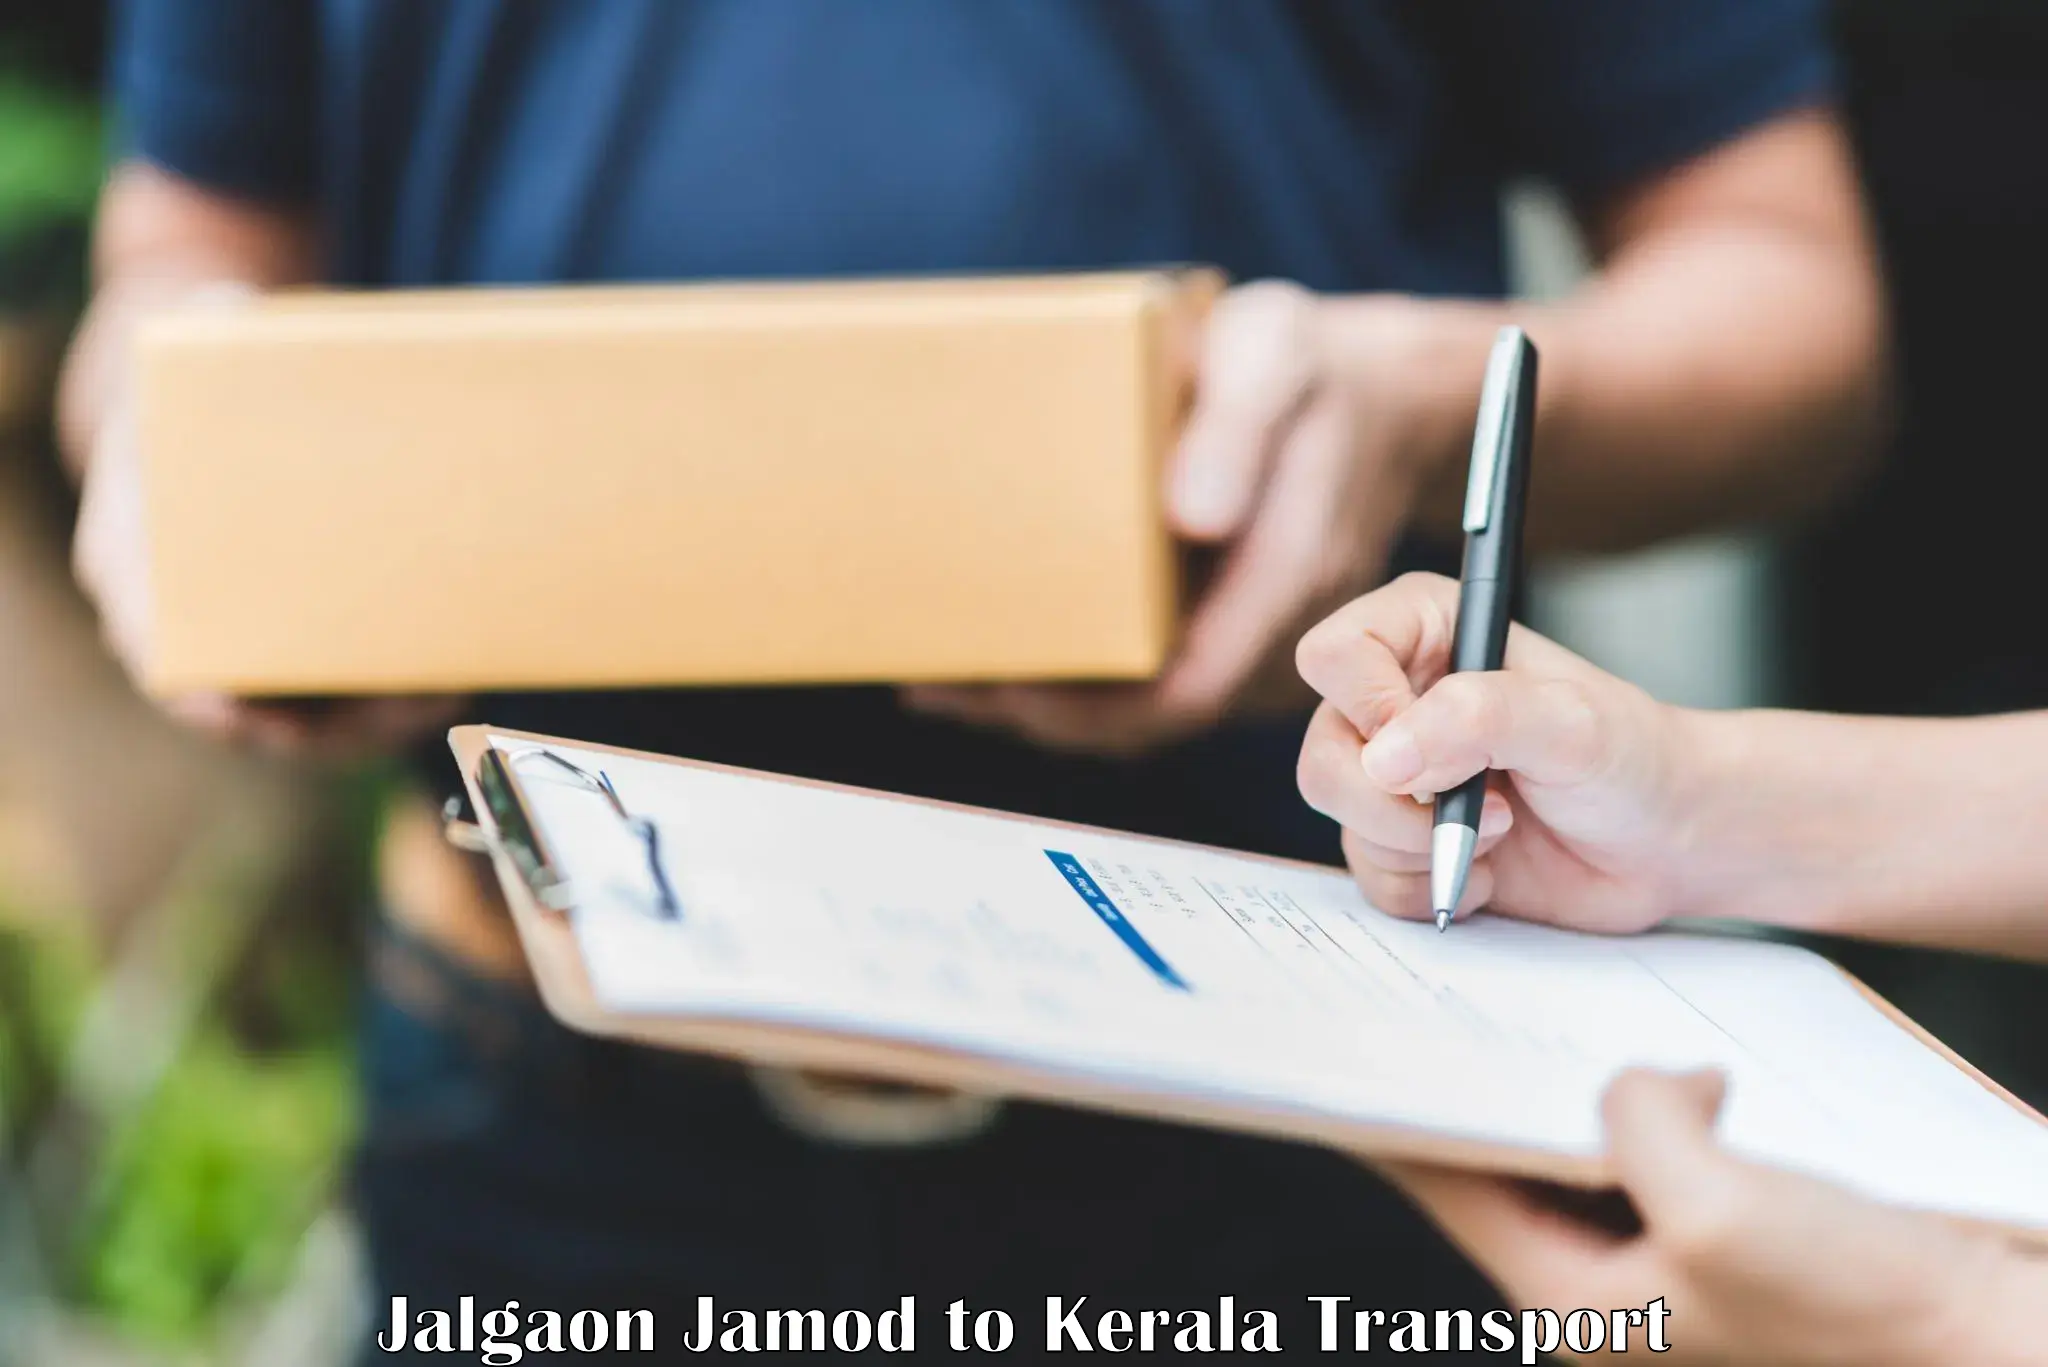 Delivery service Jalgaon Jamod to Tiruvalla